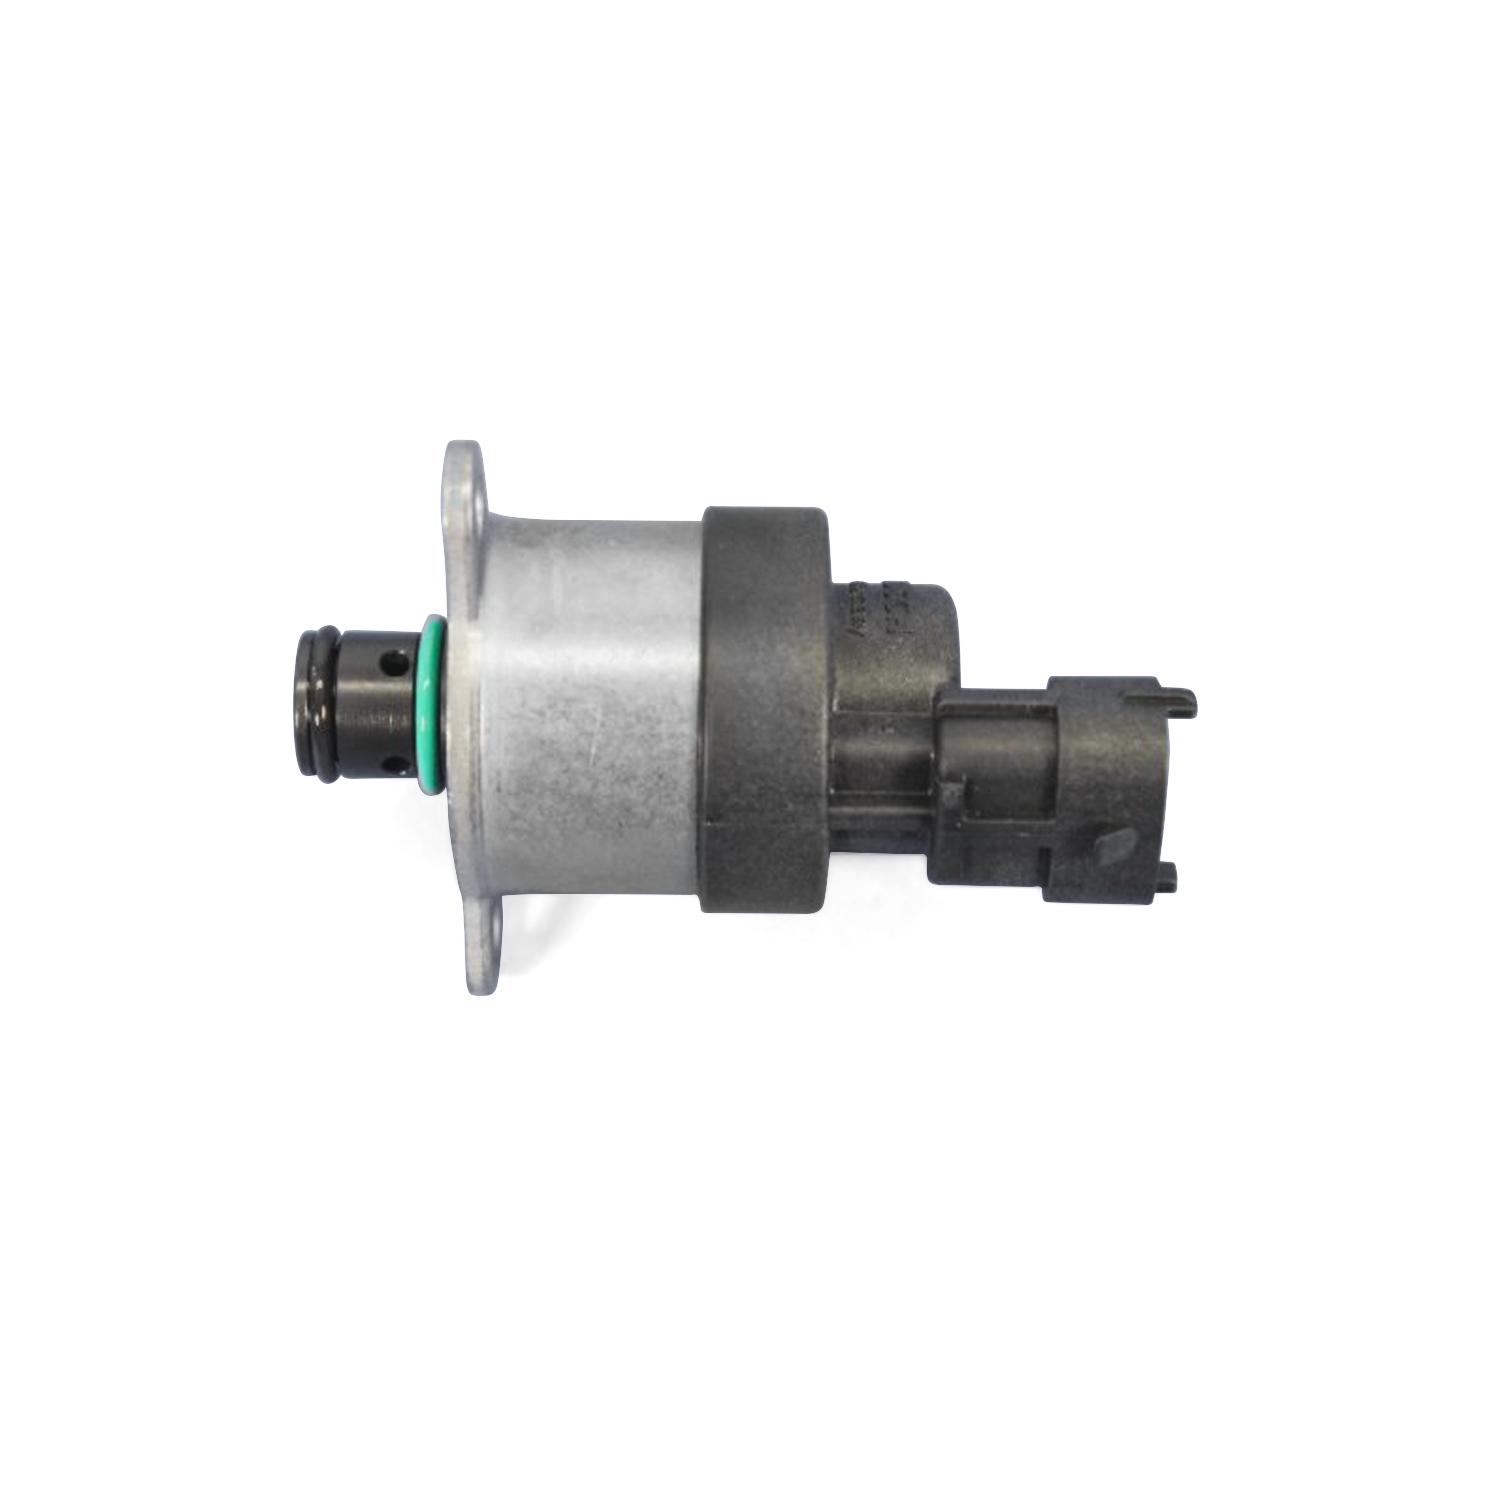 MOPAR BRAND - Diesel Fuel Injector Pump Shutdown Solenoid - MPB 68005241AA